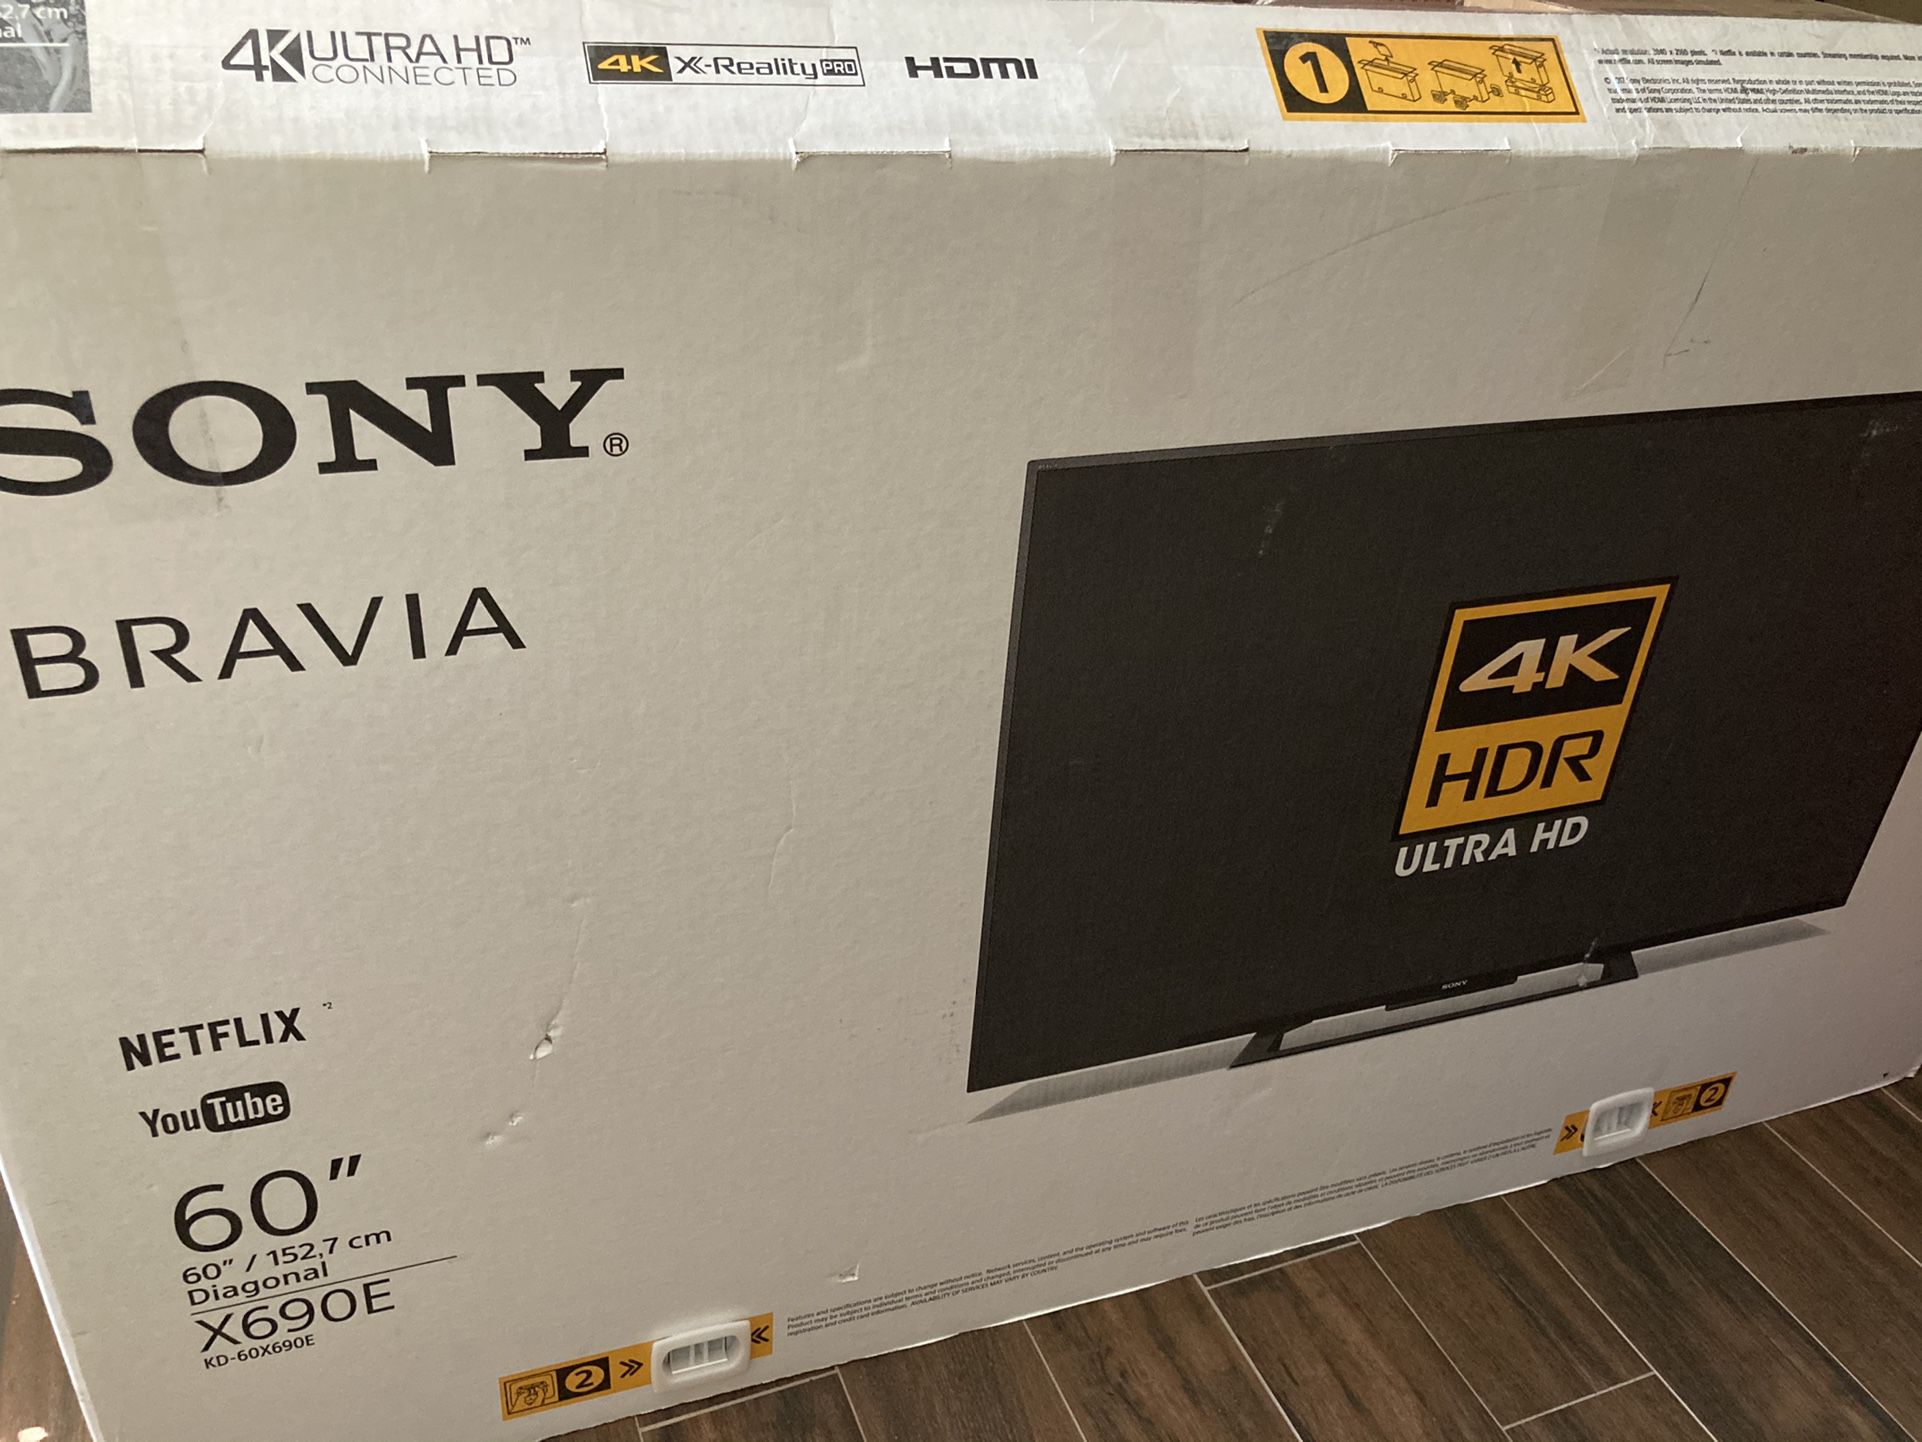 Sony 60" Class 4K UHD (2160P) Smart LED TV (KD60X690E) $450 (barely used it - still have box)